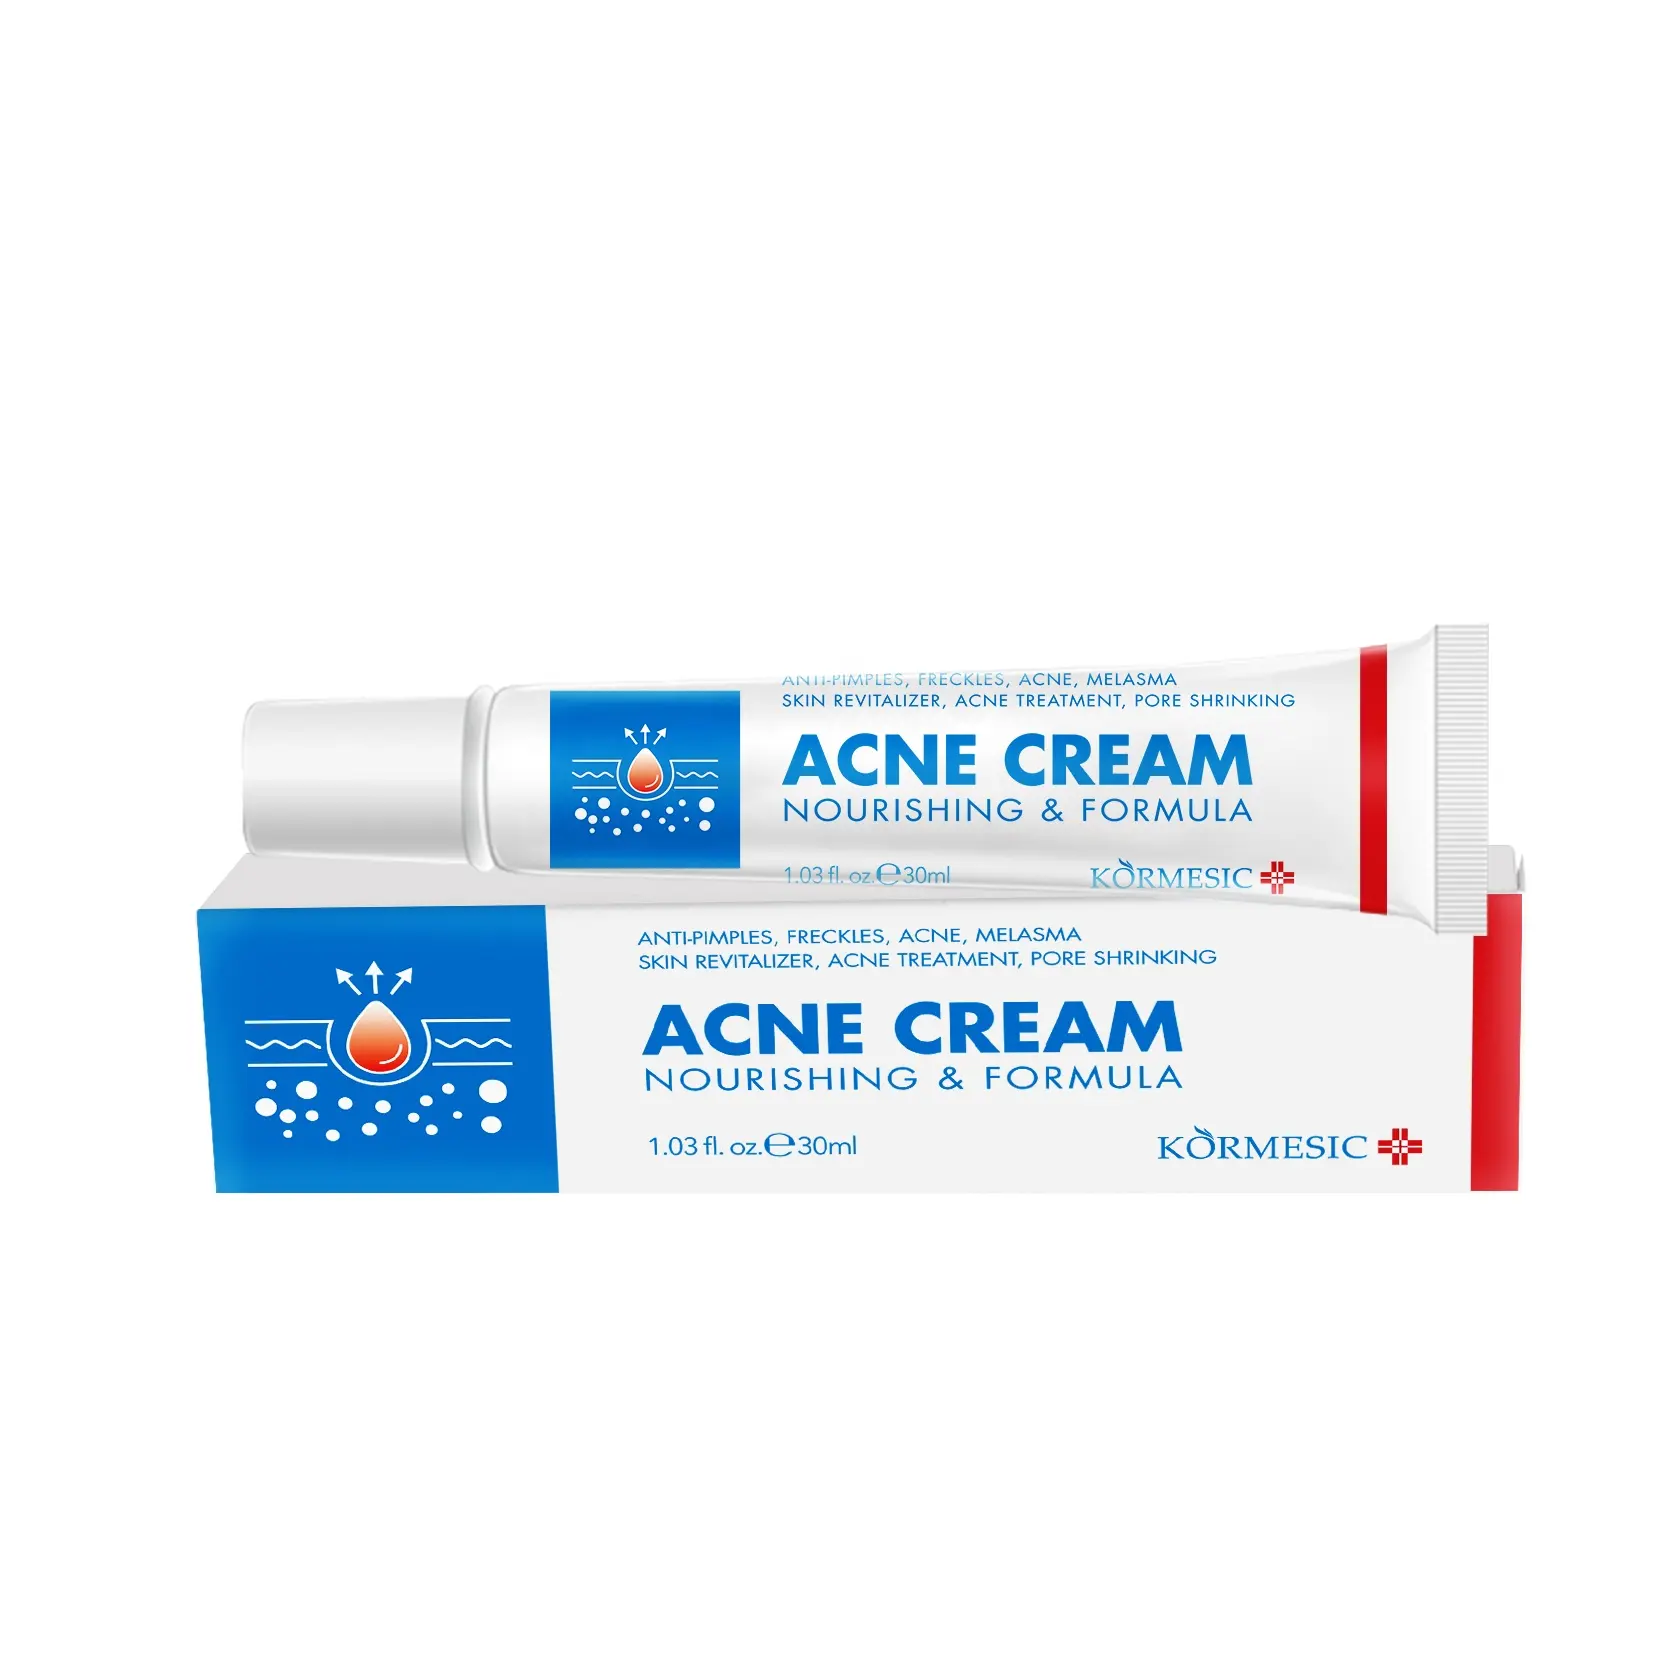 KORMESIC clear face anti acne aloe vera Deep moisturizing soothing repair face anti acne cream